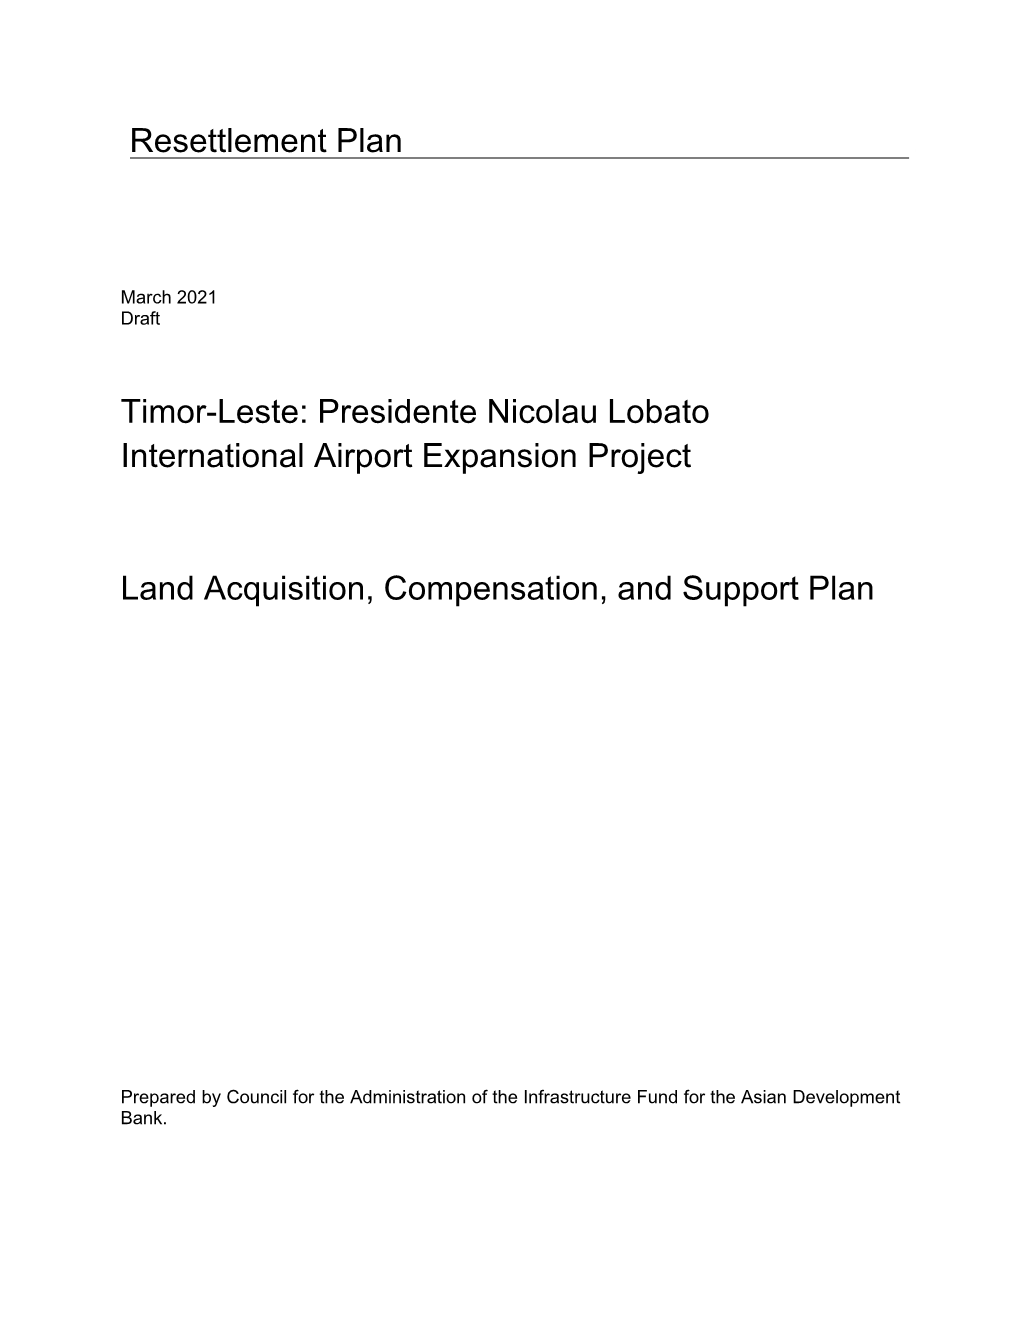 Timor-Leste: Presidente Nicolau Lobato International Airport Expansion Project